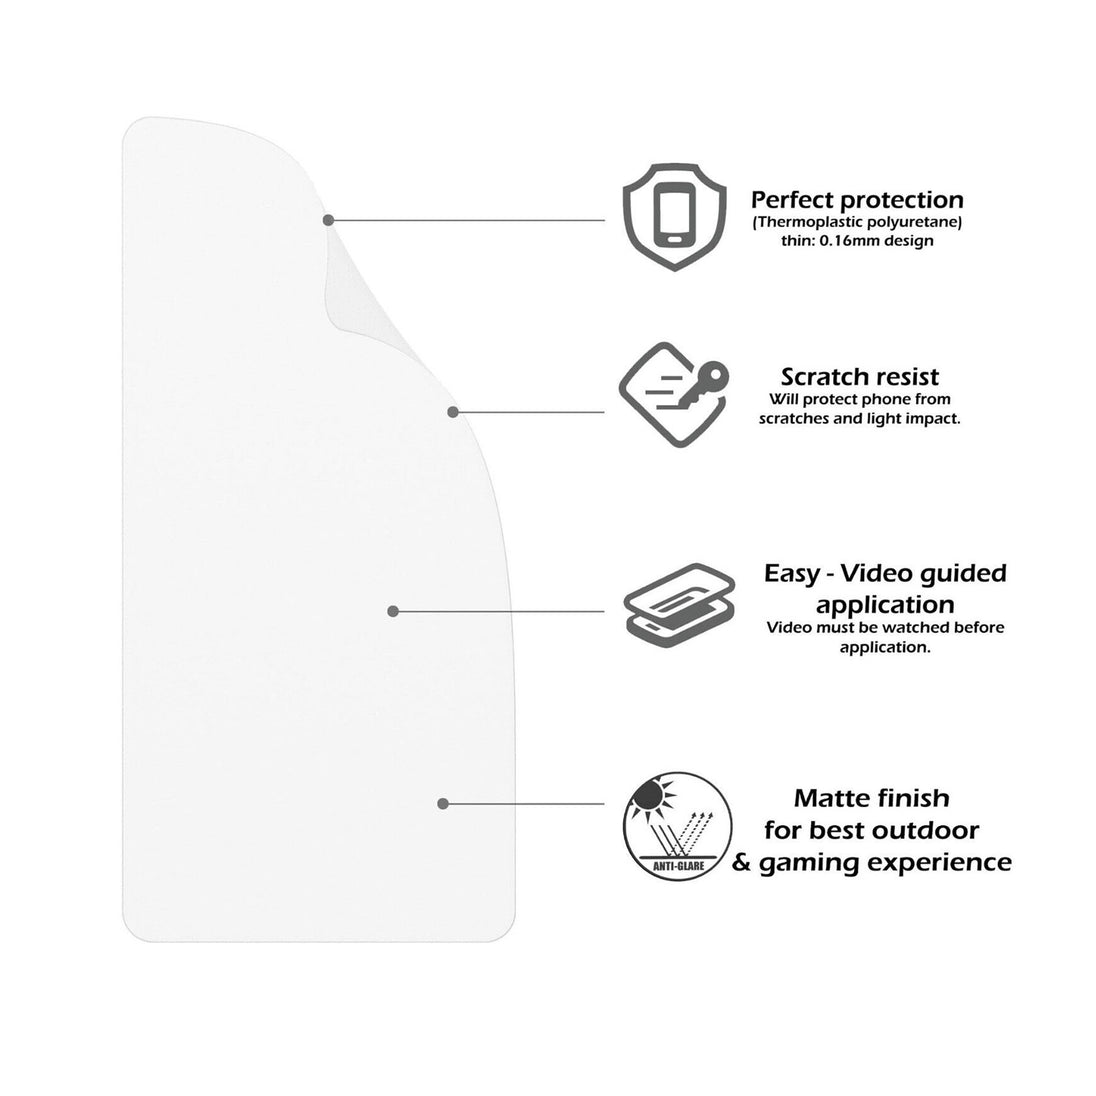 Motorola ThinkPhone screen protector matte anti glare paper like cover properties image